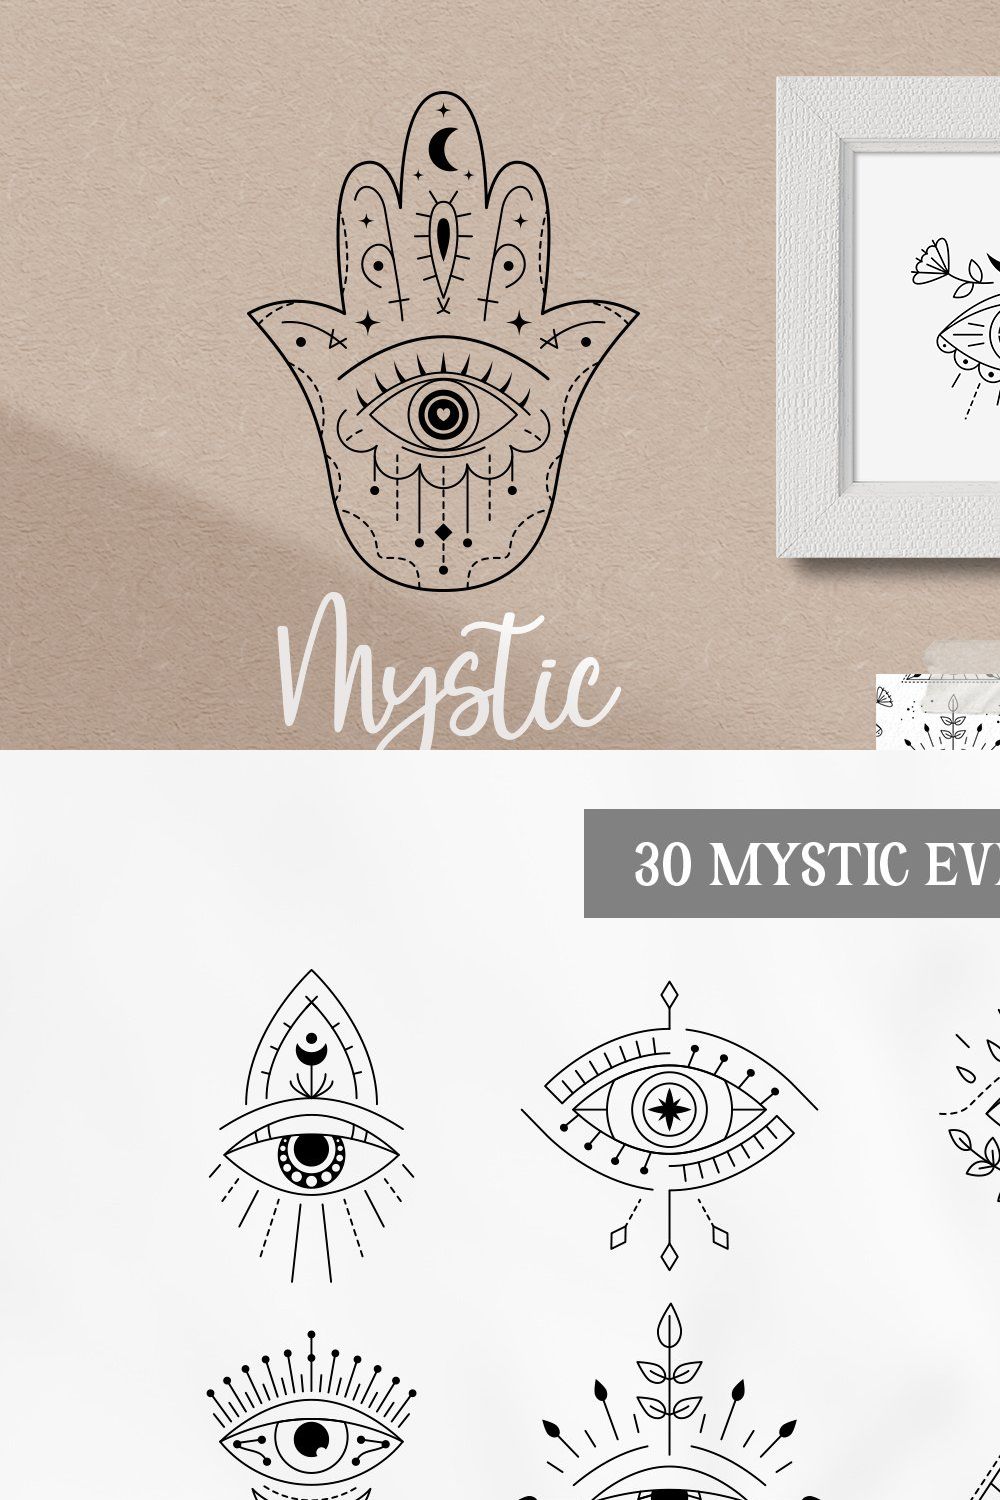 Mystic Evil Eye pinterest preview image.